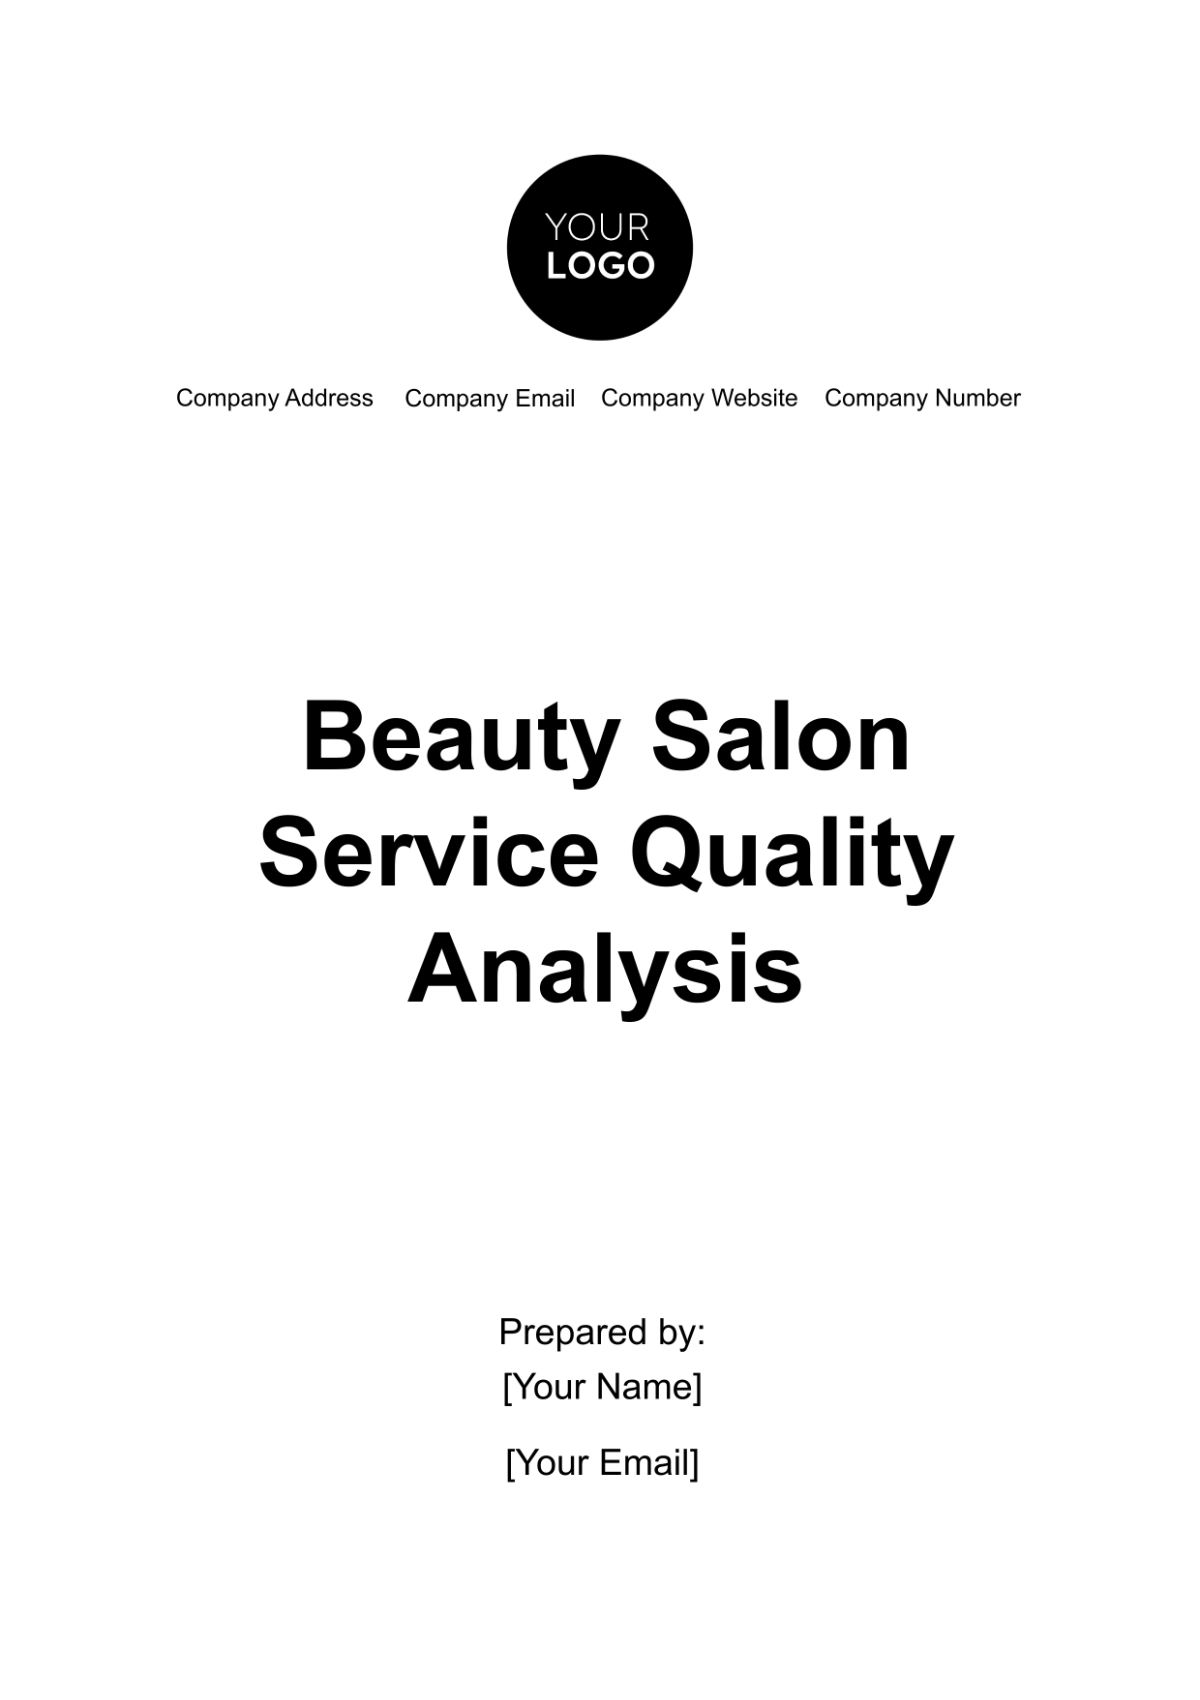 Beauty Salon Service Quality Analysis Template